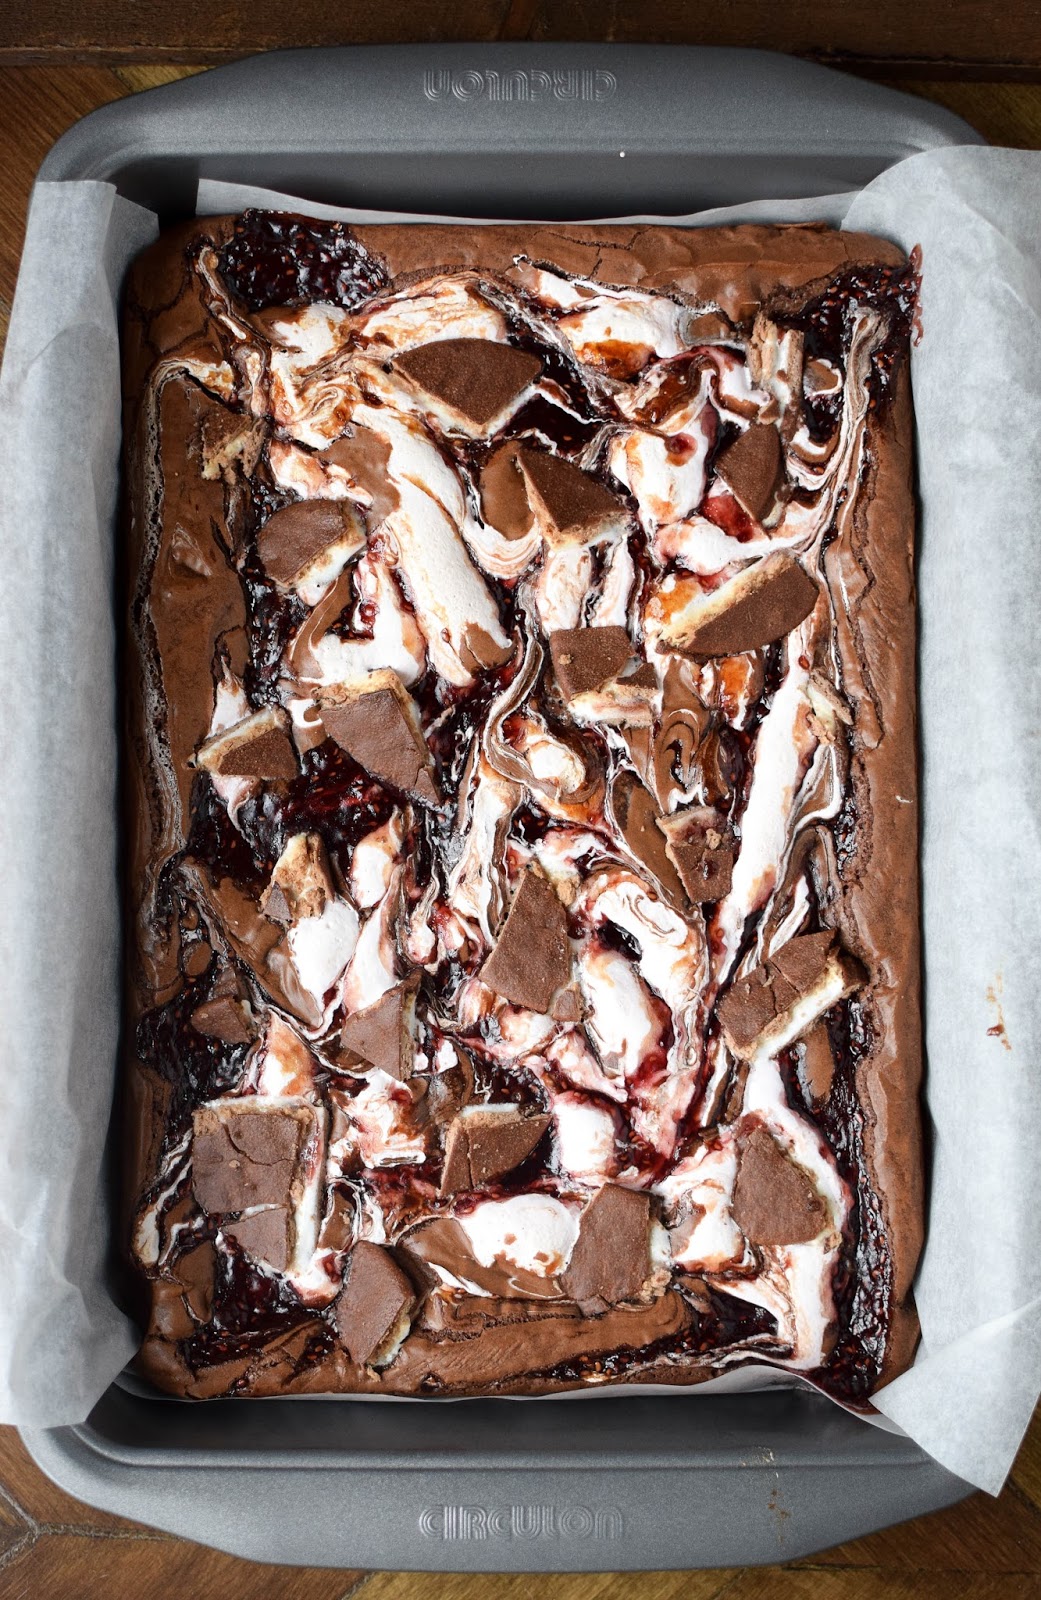 Chocolate brownie swirled with marshmallow fluff, raspberry jam and studded with chunks of jammy waggon wheel.